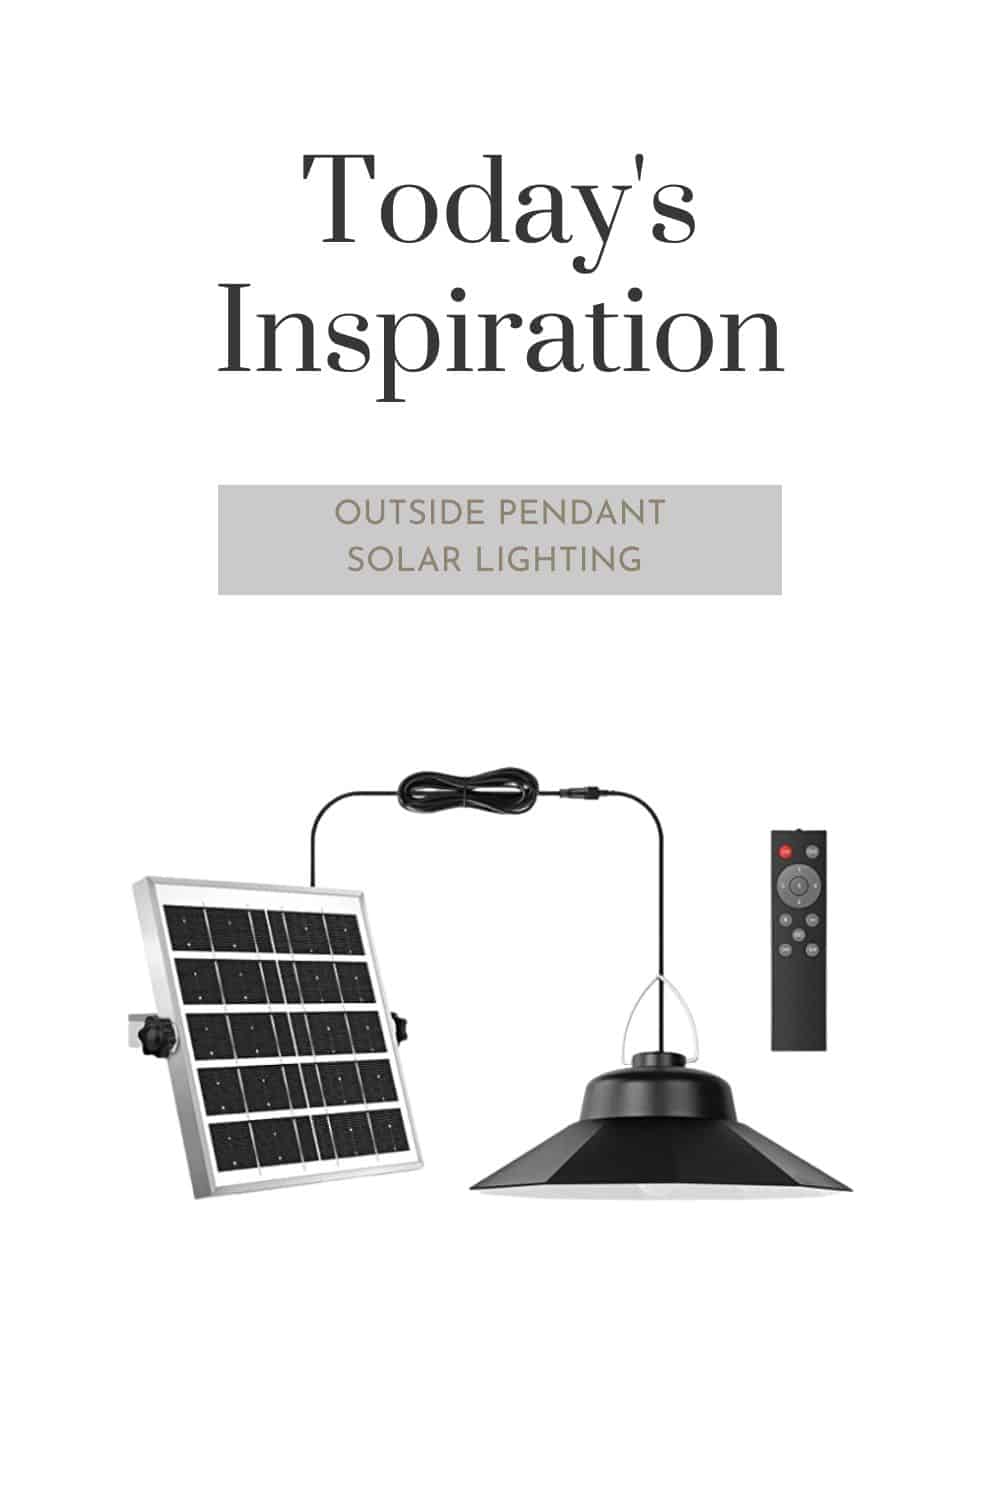 enduring illumination for exterior lighting a Pendant Solar light from Amazon (screenshot)